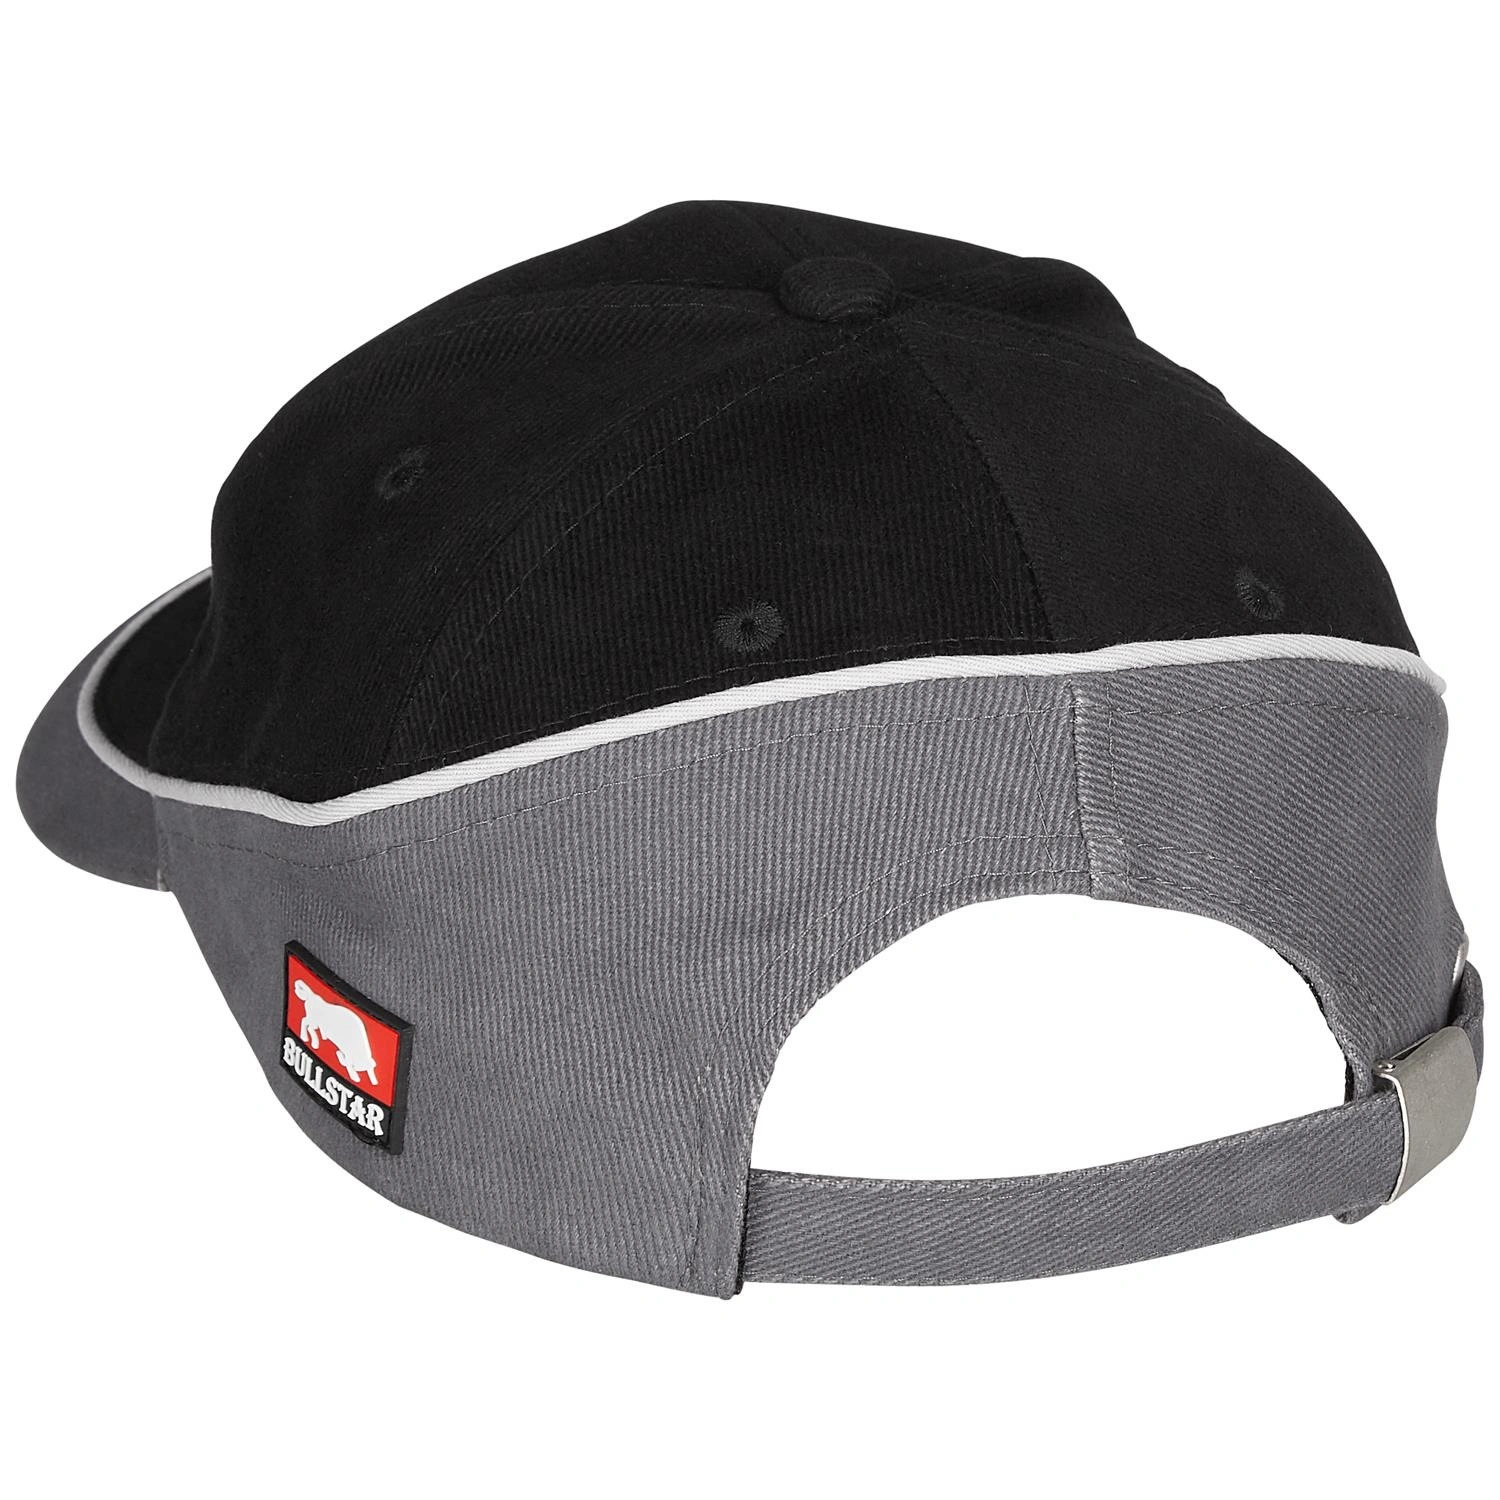 BULLSTAR Cap »VISION«, Baumwolle, schwarz/grau